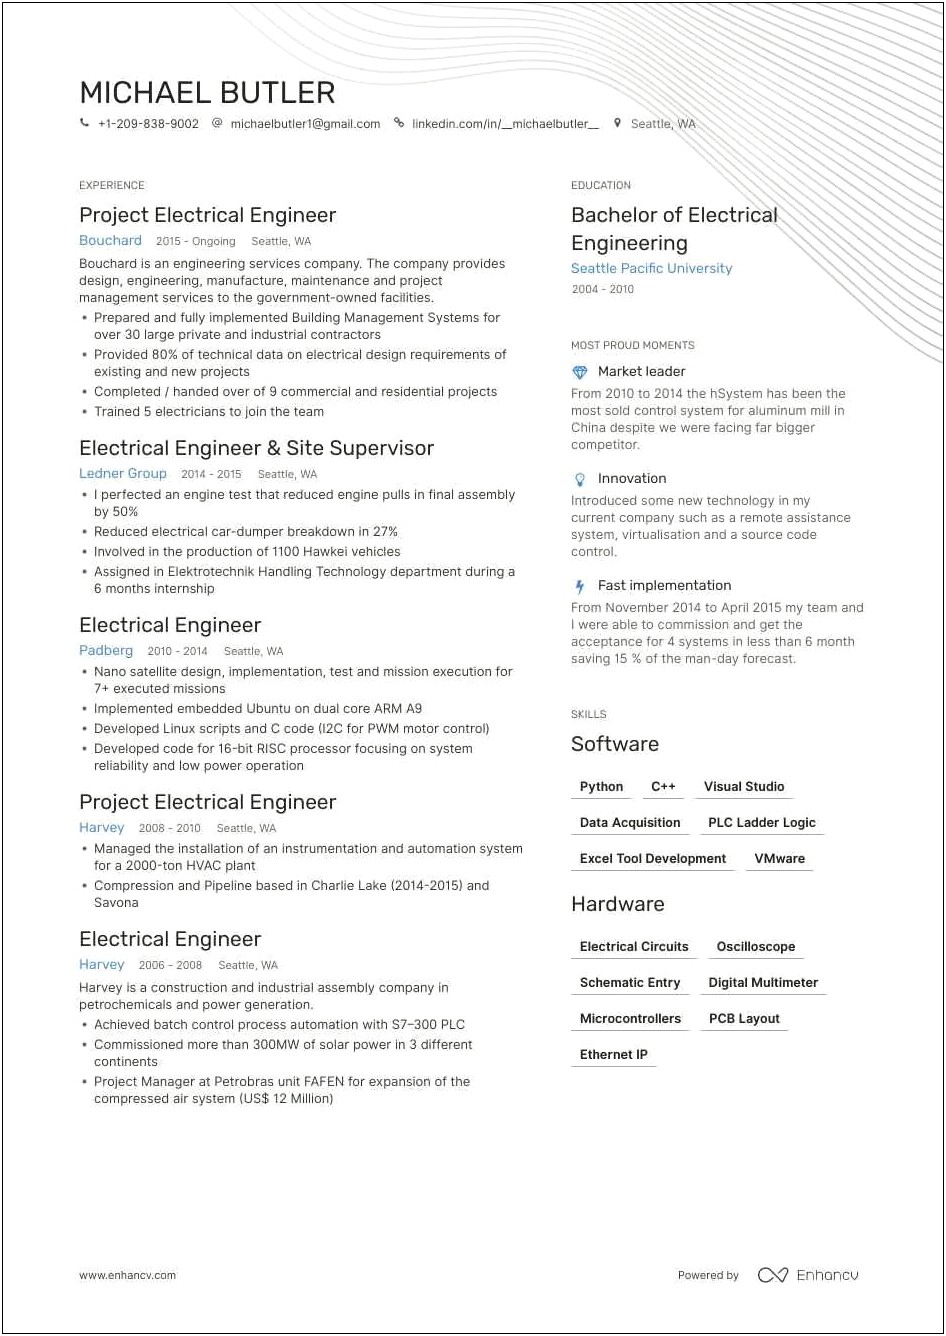 Resume Career Objective Engineering Internship